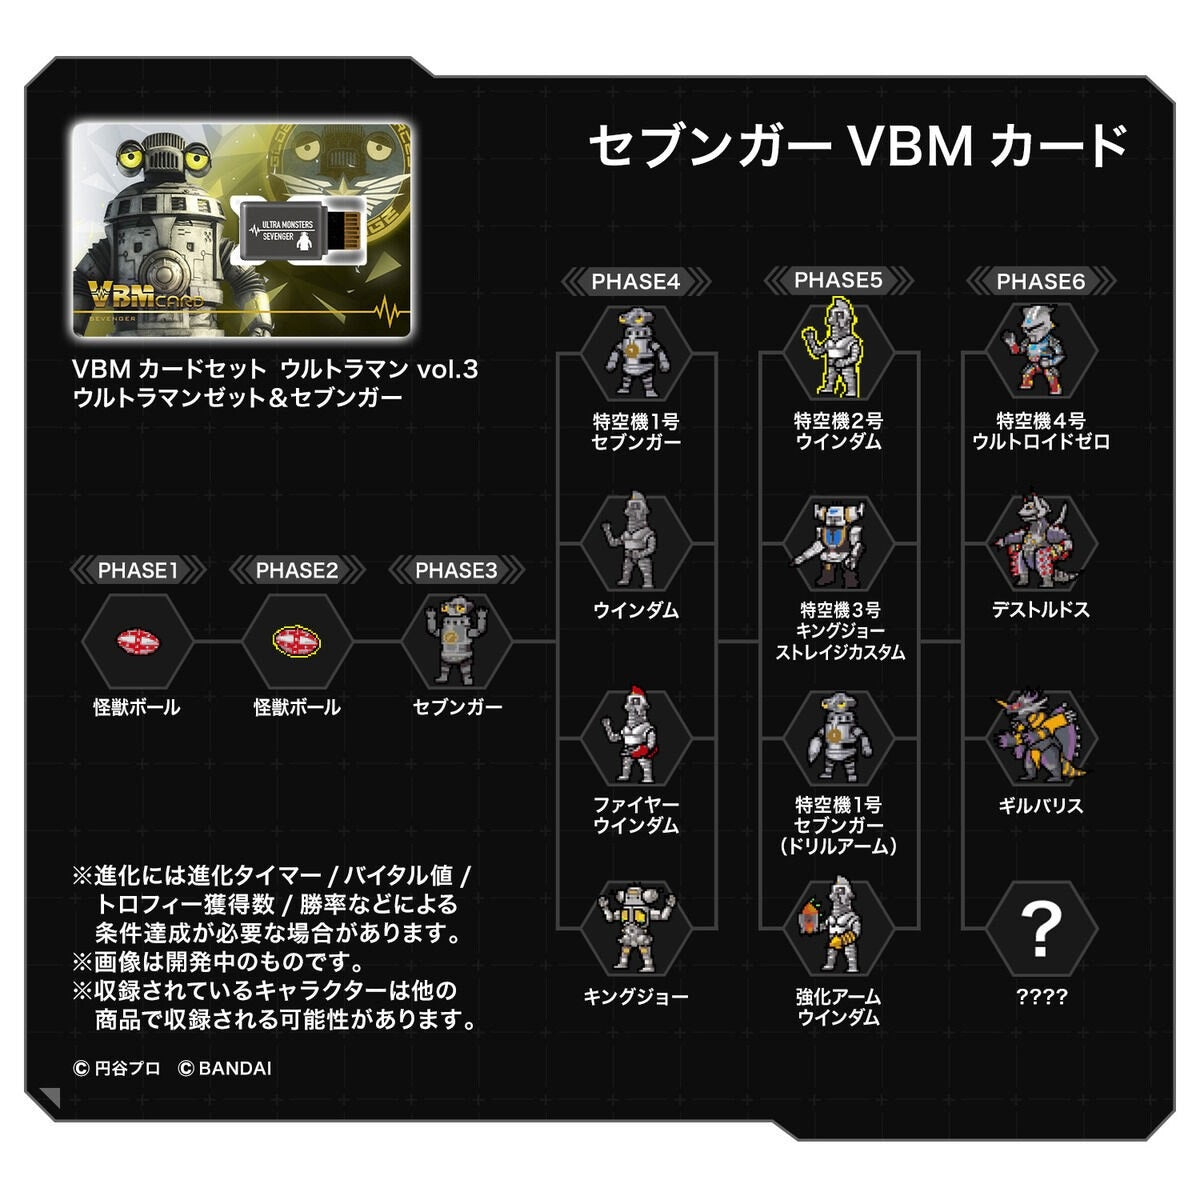 VBM Card Set Ultraman Vol.3 Ultraman Z &amp; Sevenger (Character Toy)-Bandai-Ace Cards &amp; Collectibles